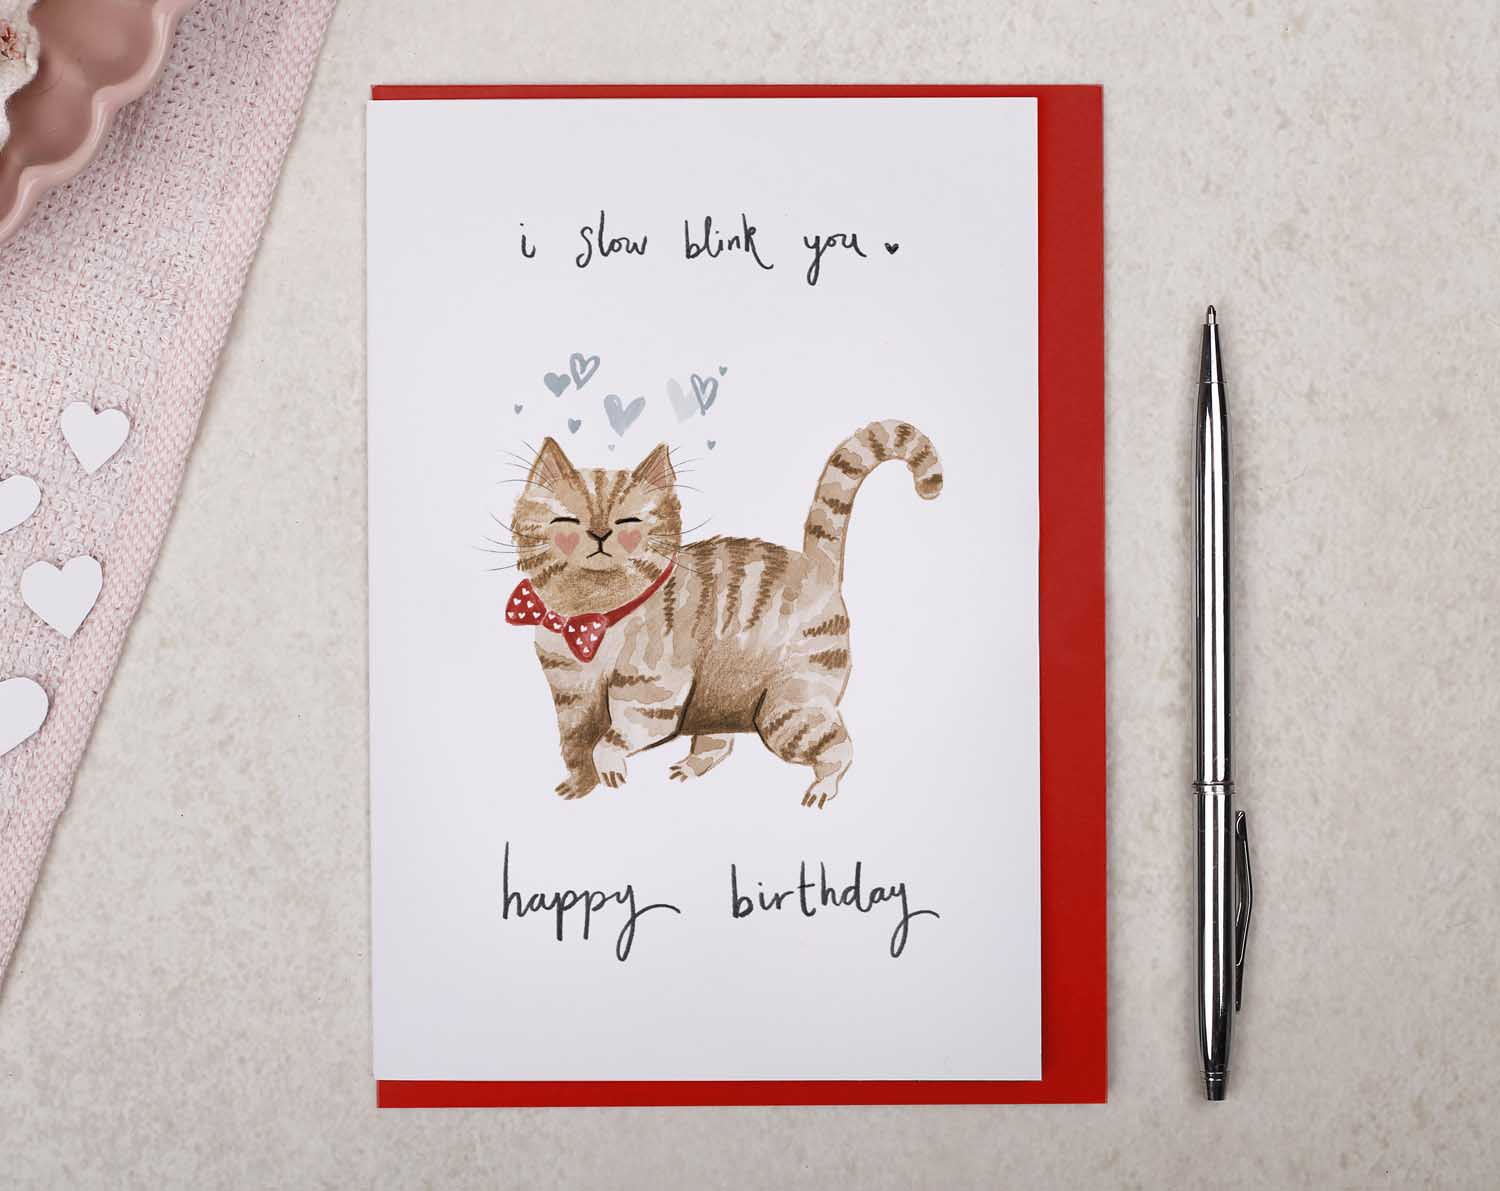 Cat 'Slow Blinking' Birthday Card